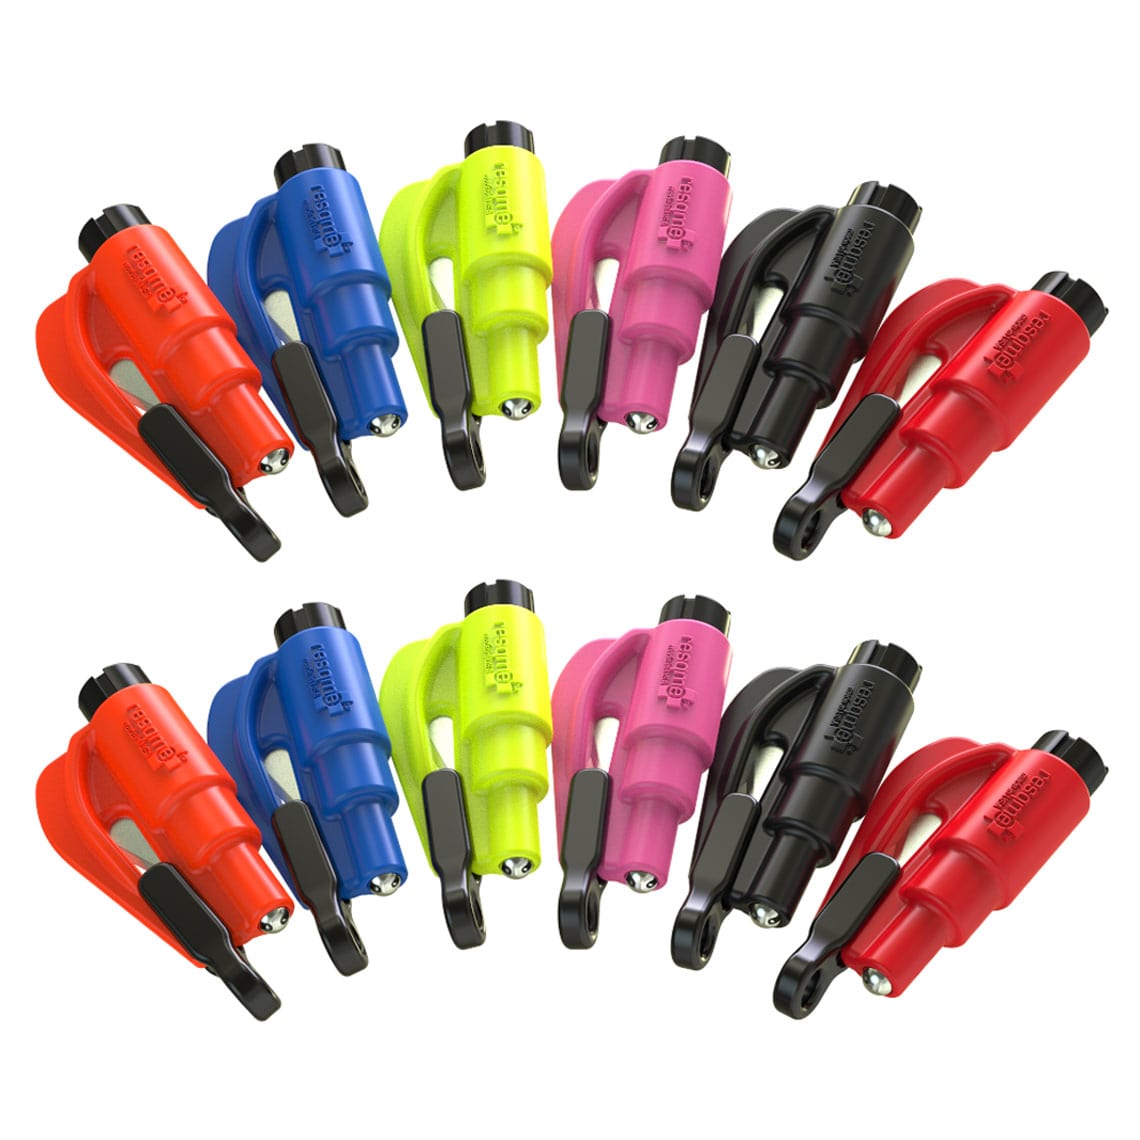 resqme® Car Escape Tool, Seatbelt Cutter / Window Breaker - Family Pack 12 multicolor units